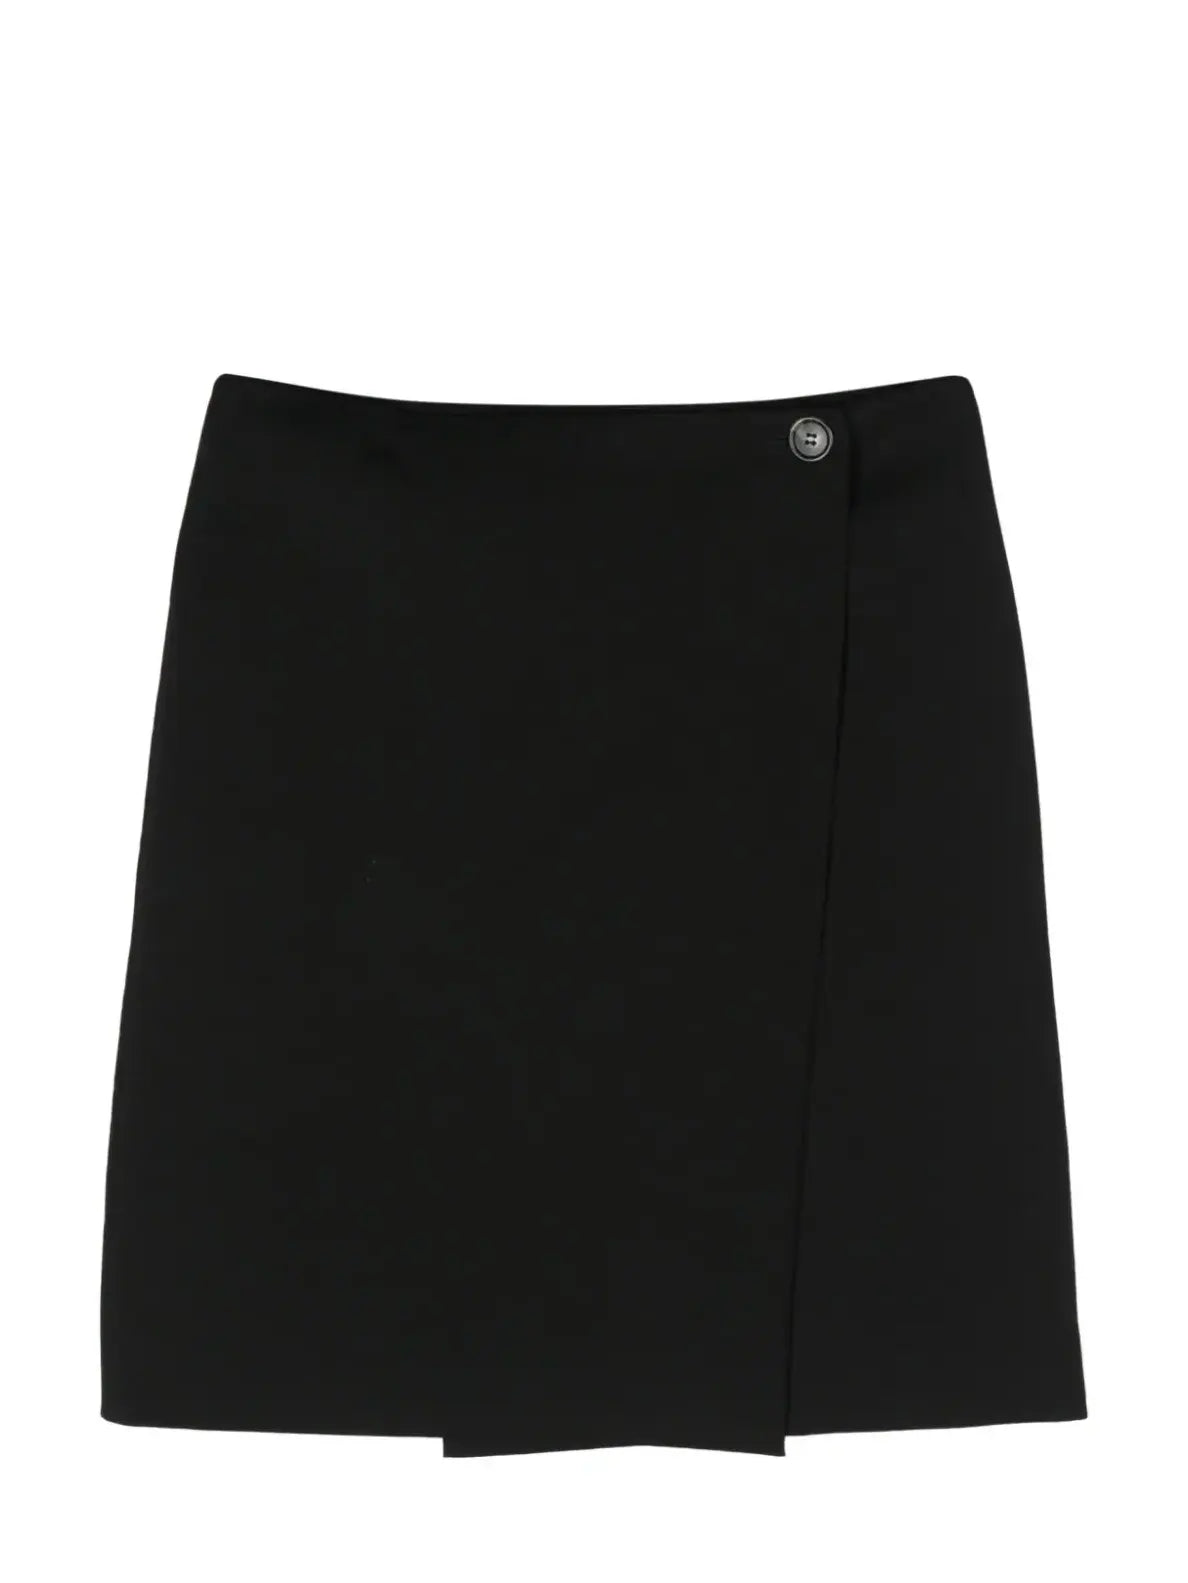 MERIS wrap skirt, black